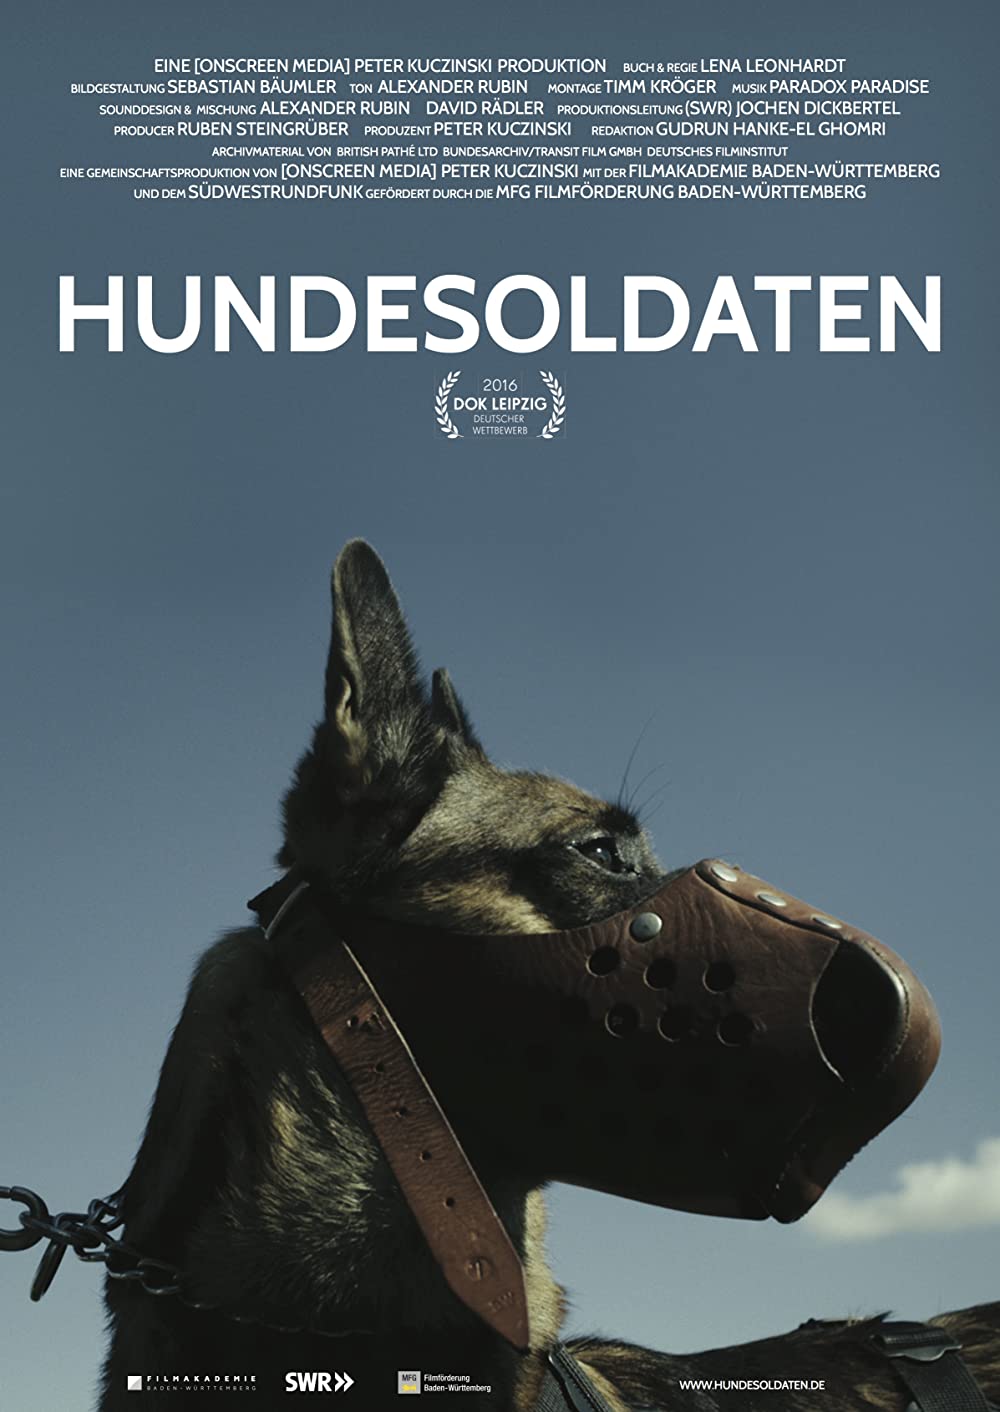 Filmbeschreibung zu Hundesoldaten